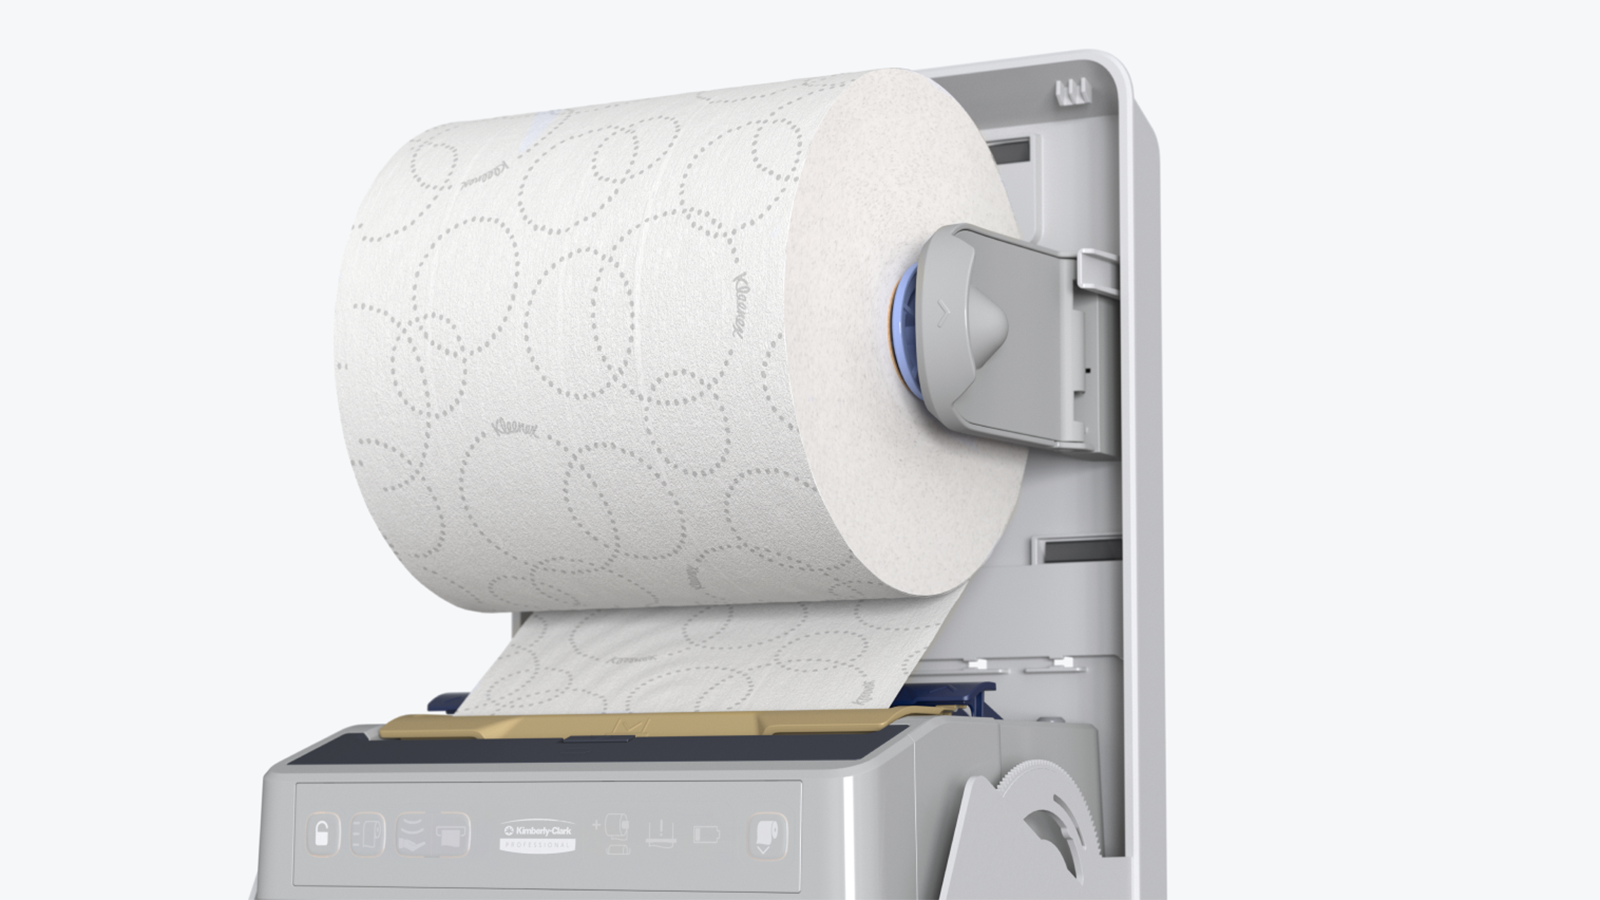 Electric Paper Dispenser Sensor Automatic Towel Dispenser Toilet